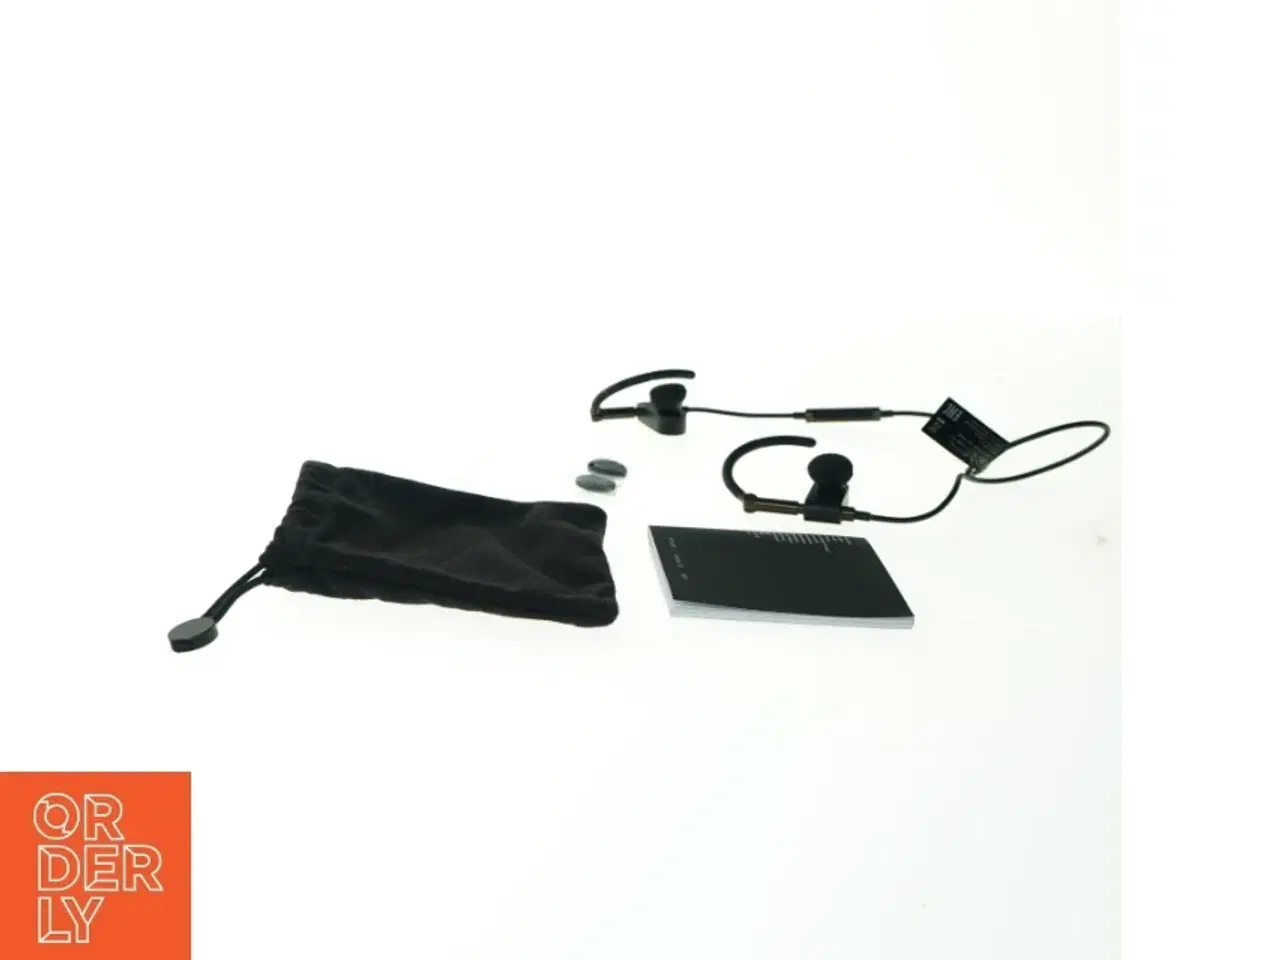 Billede 4 - Høretelefoner/Earset fra B&O (str. 60 x 5 cm)